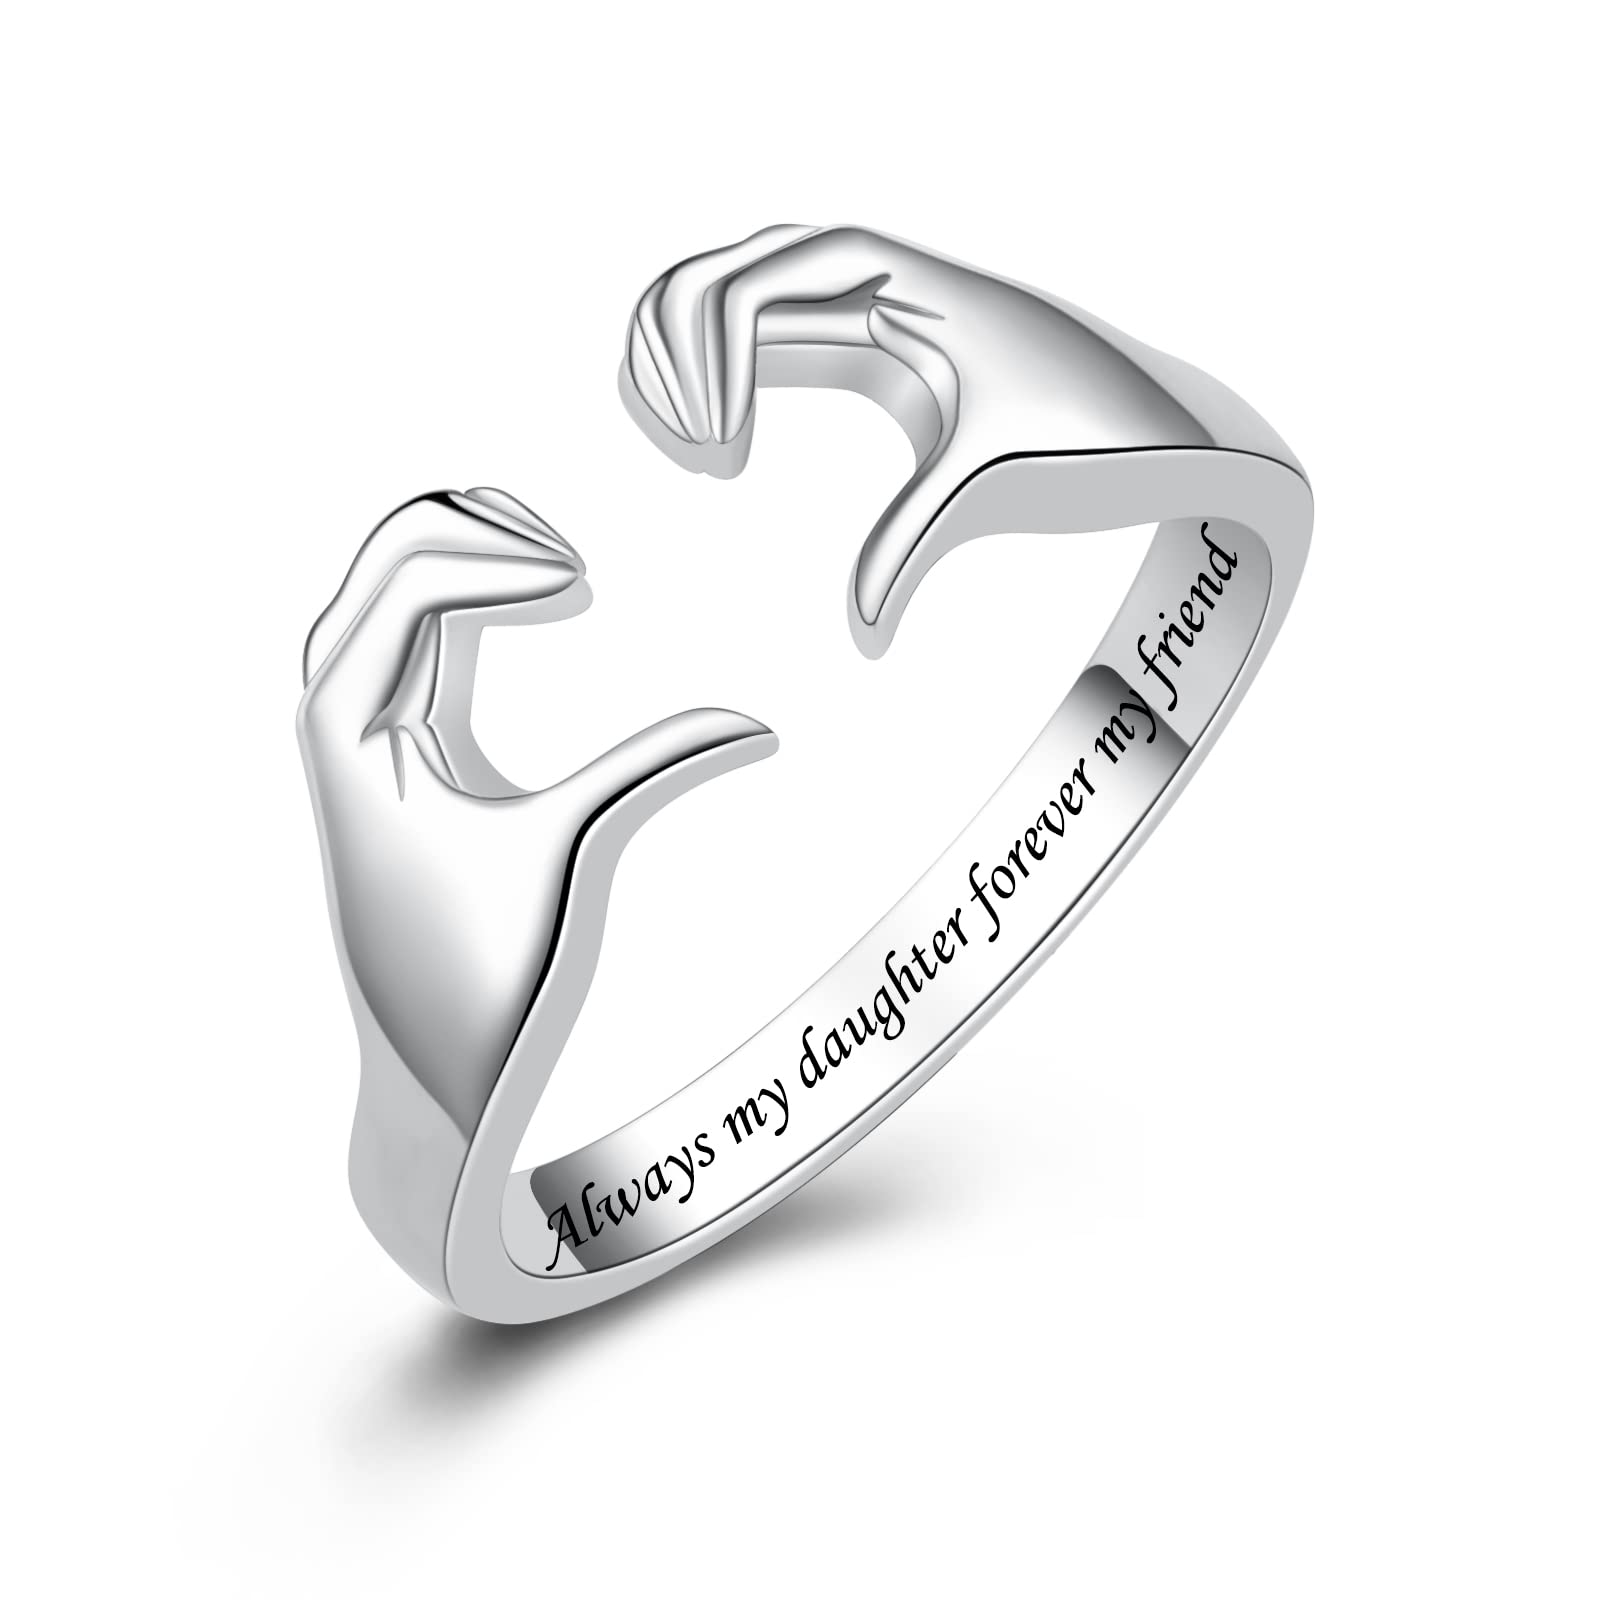 Pure 925 Silver Trending Hug Ring – 𝗗𝗲𝘀𝗶𝗴𝗻𝗲𝗿 𝗙𝗶𝗻𝗲 𝗦𝗶𝗹𝘃𝗲𝗿  𝗝𝗲𝘄𝗲𝗹𝗹𝗲𝗿𝘆